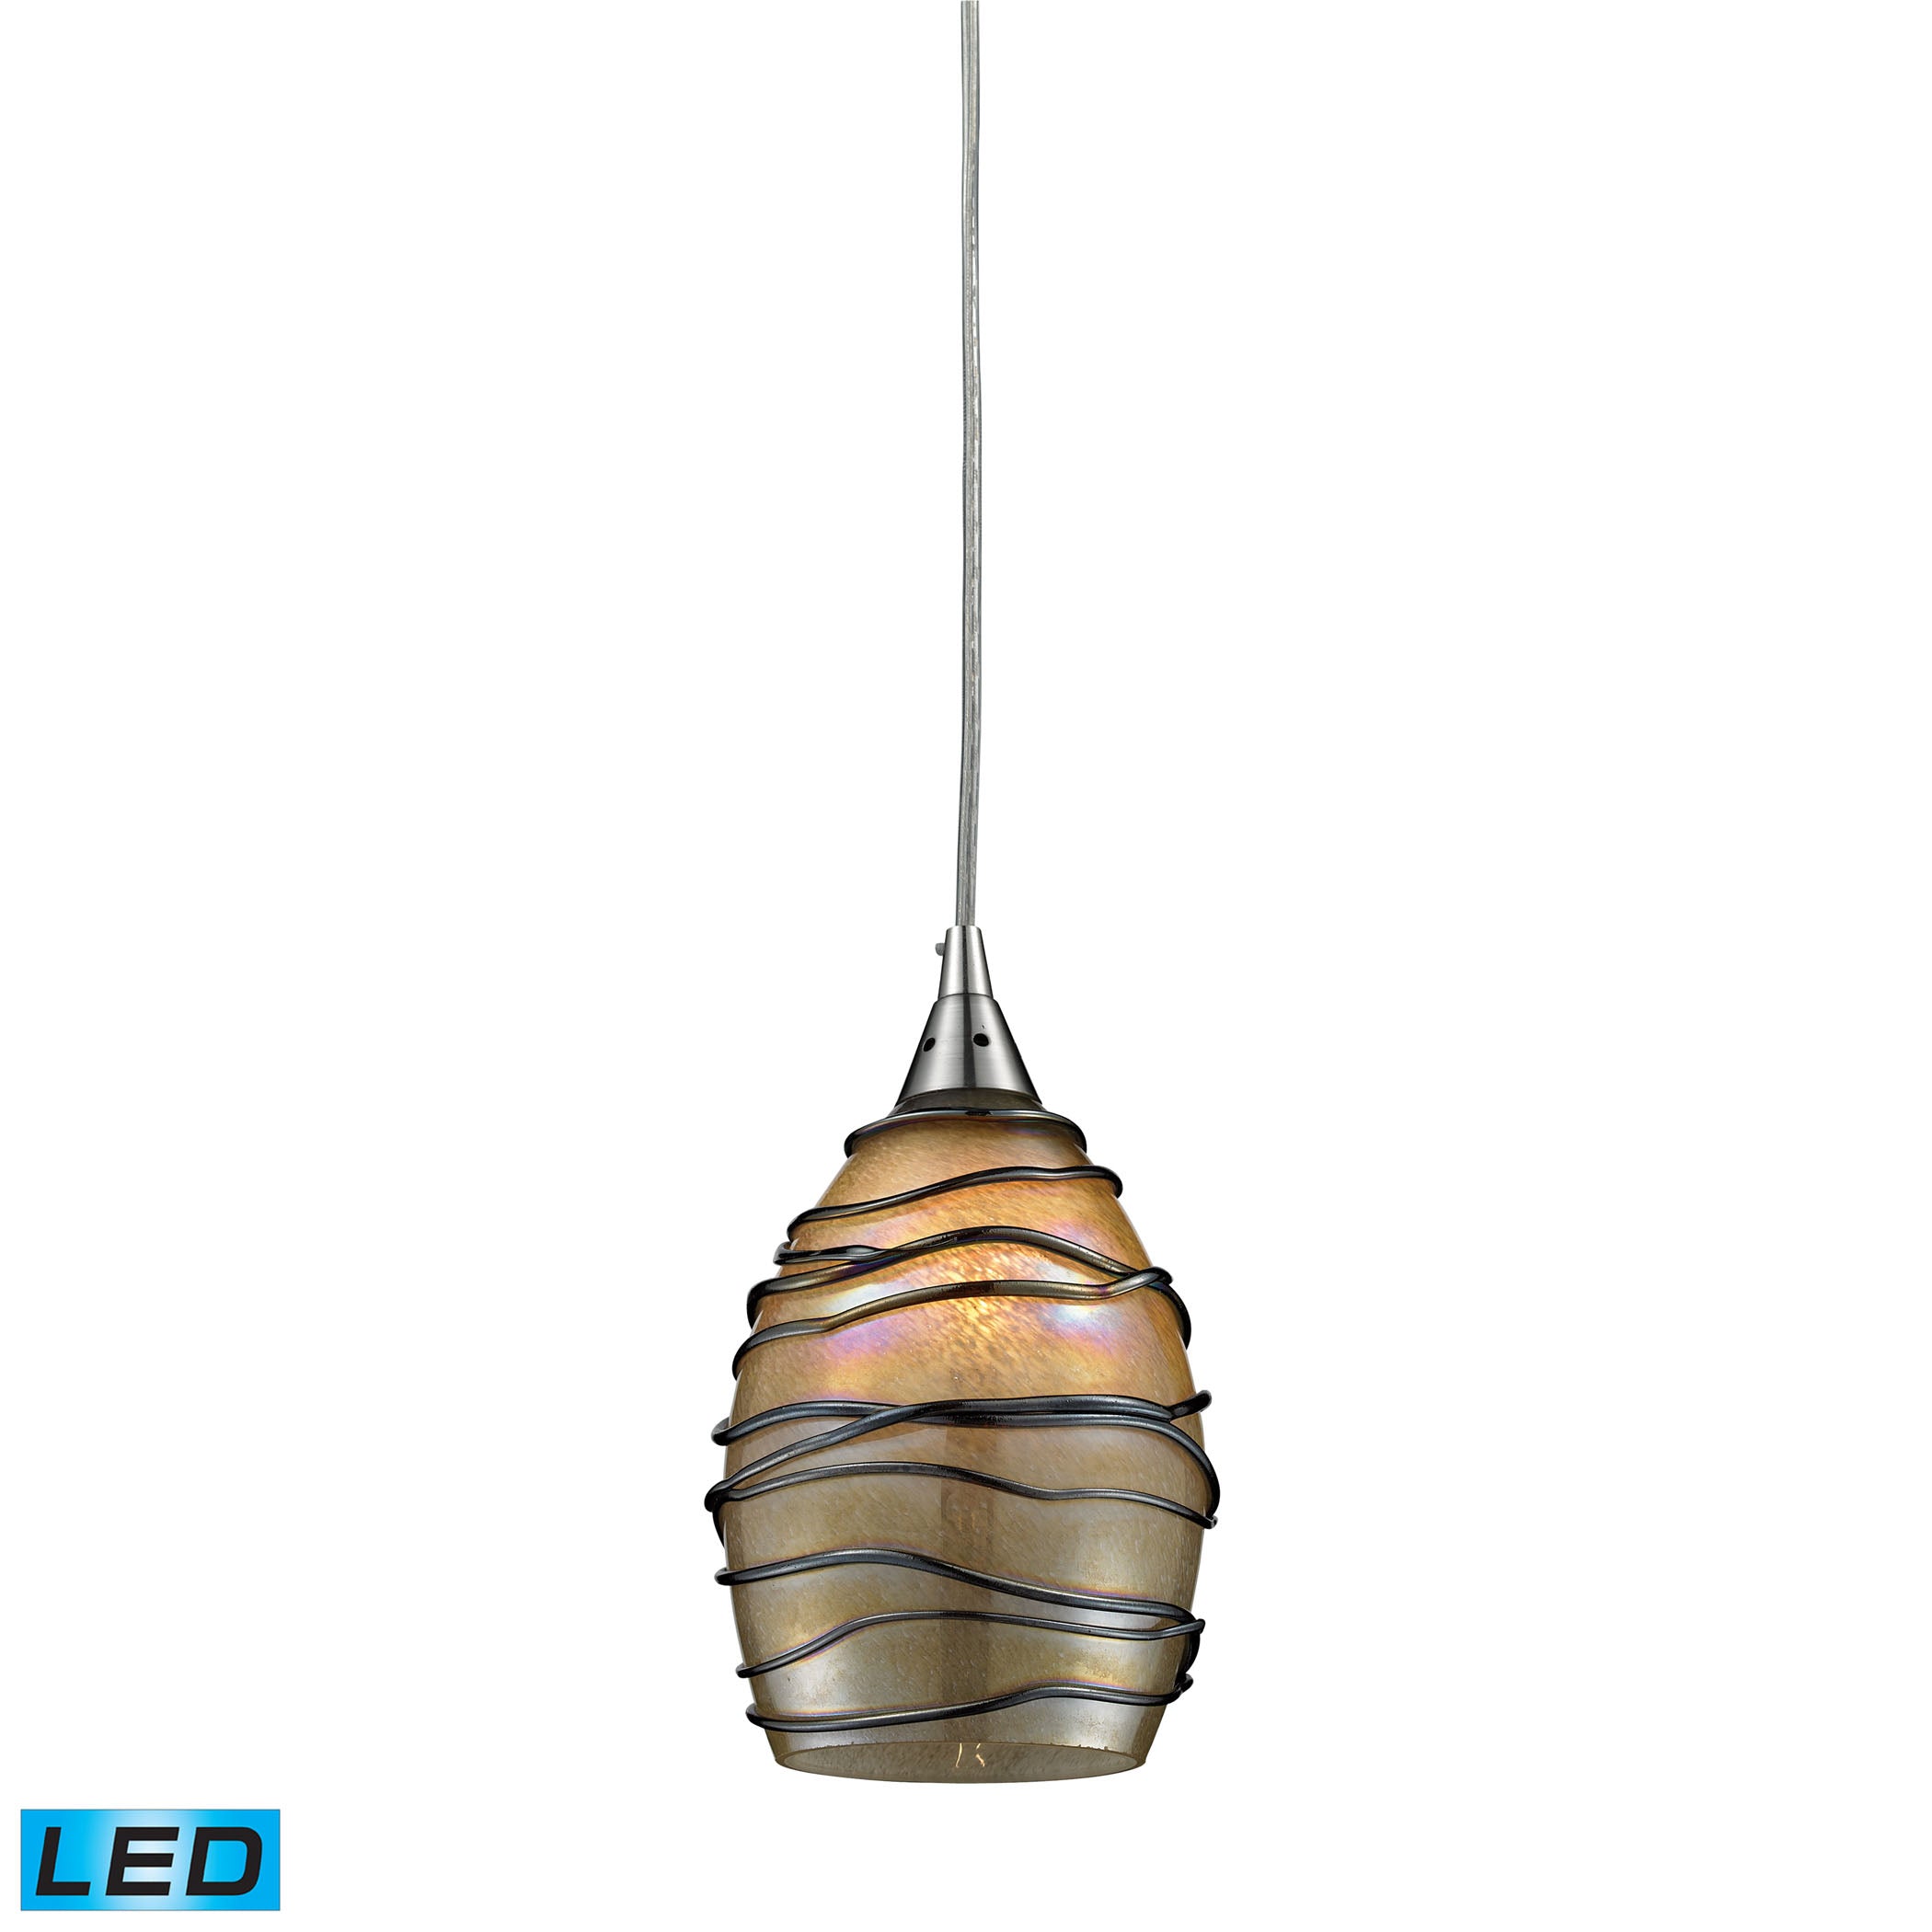 ELK Lighting 31142/1-LED Vines 1-Light Mini Pendant in Satin Nickel with Tan Glass - Includes LED Bulb